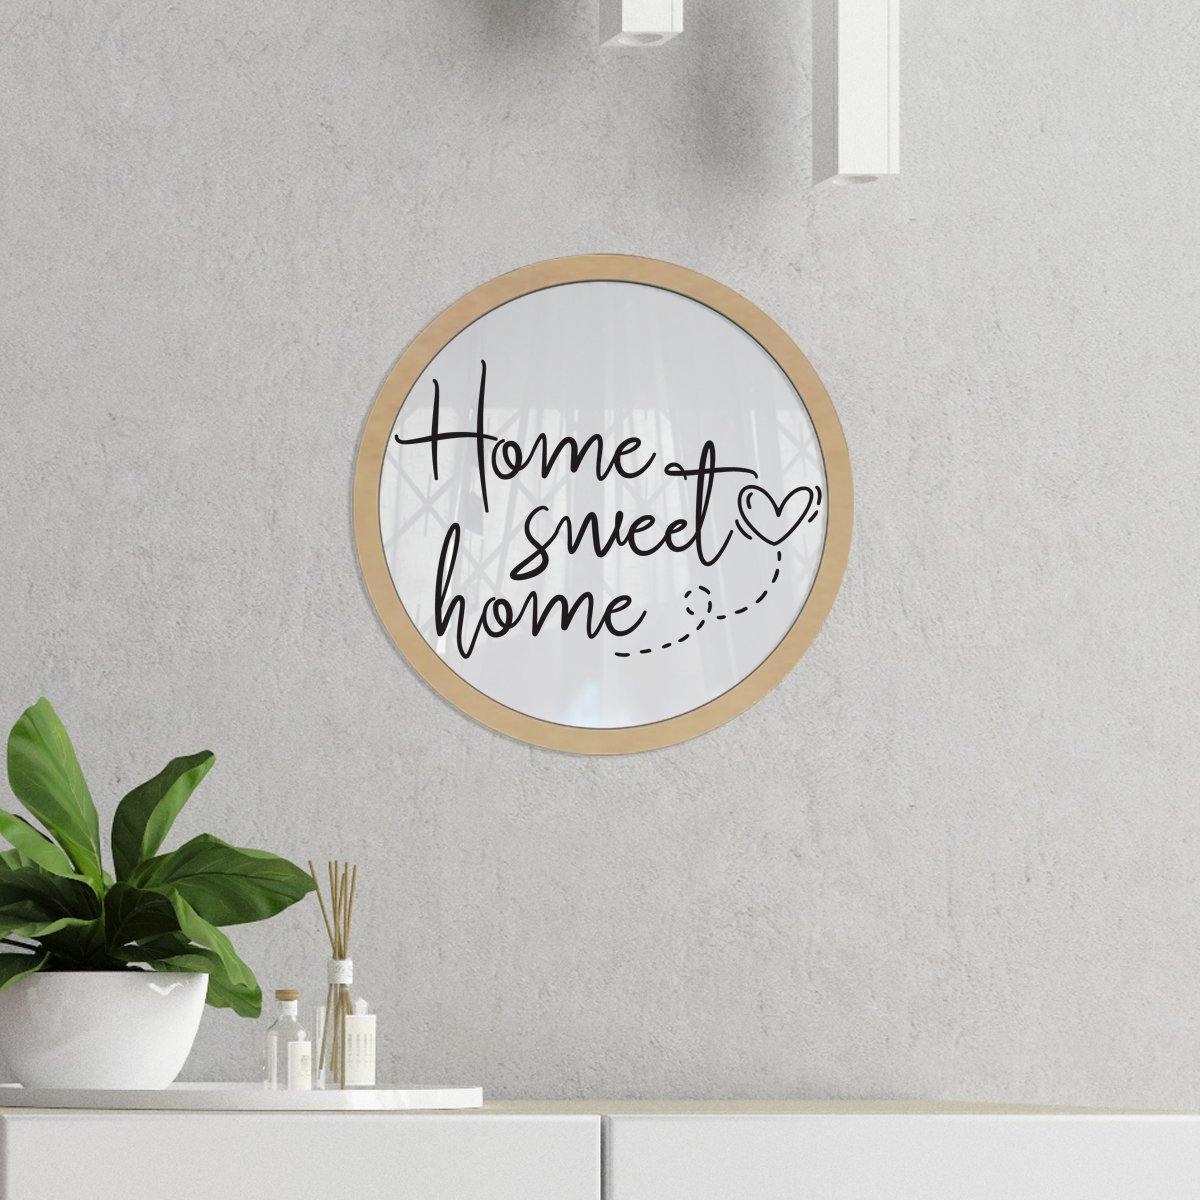 Home sweet home - Diseño con vidrio - FABRITECA